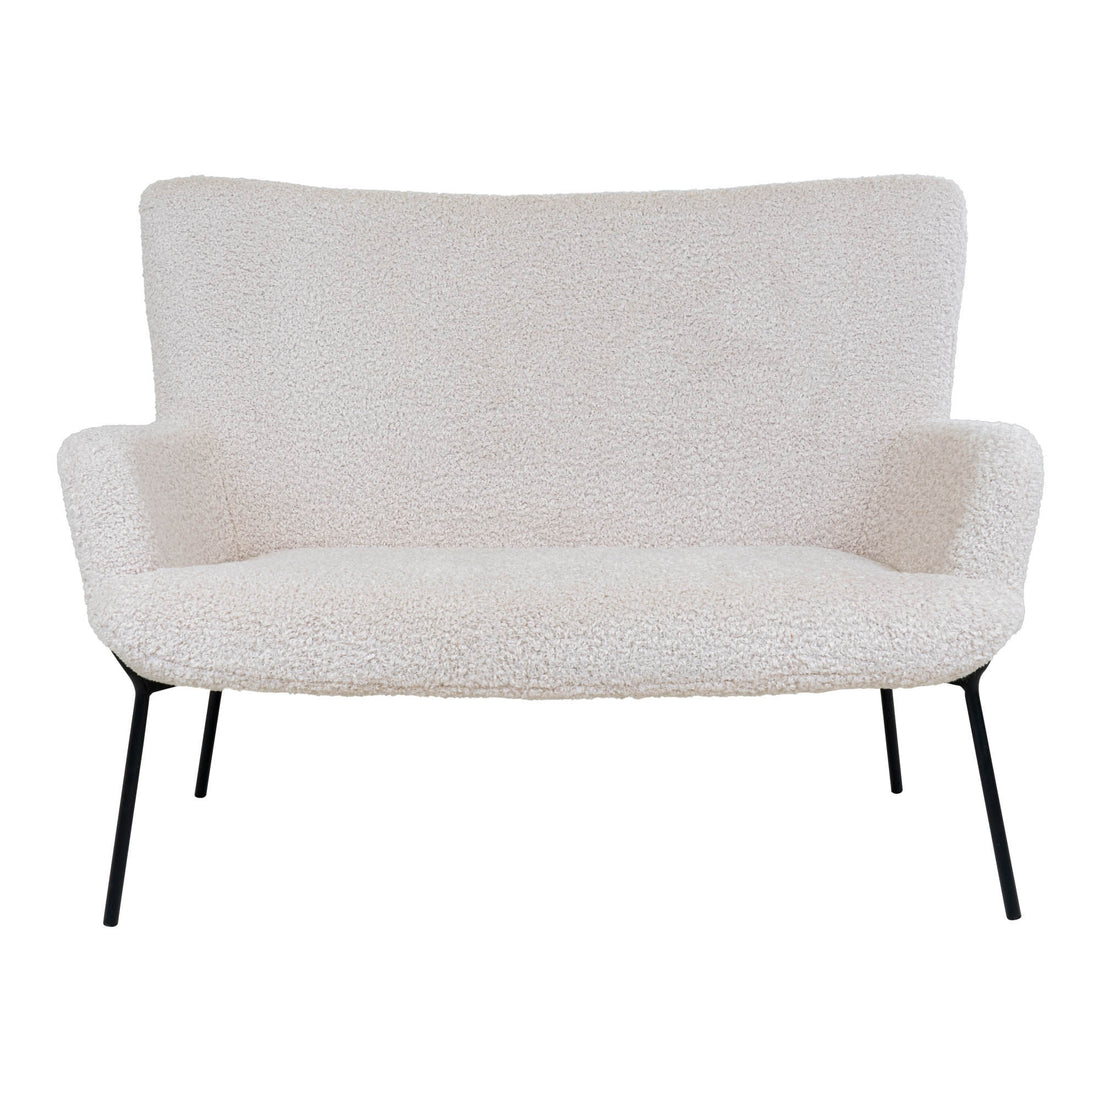 Glasgow sofa - 2 personsofa i kunstig lambeskin, hvit med svarte ben - 1 - PC -er